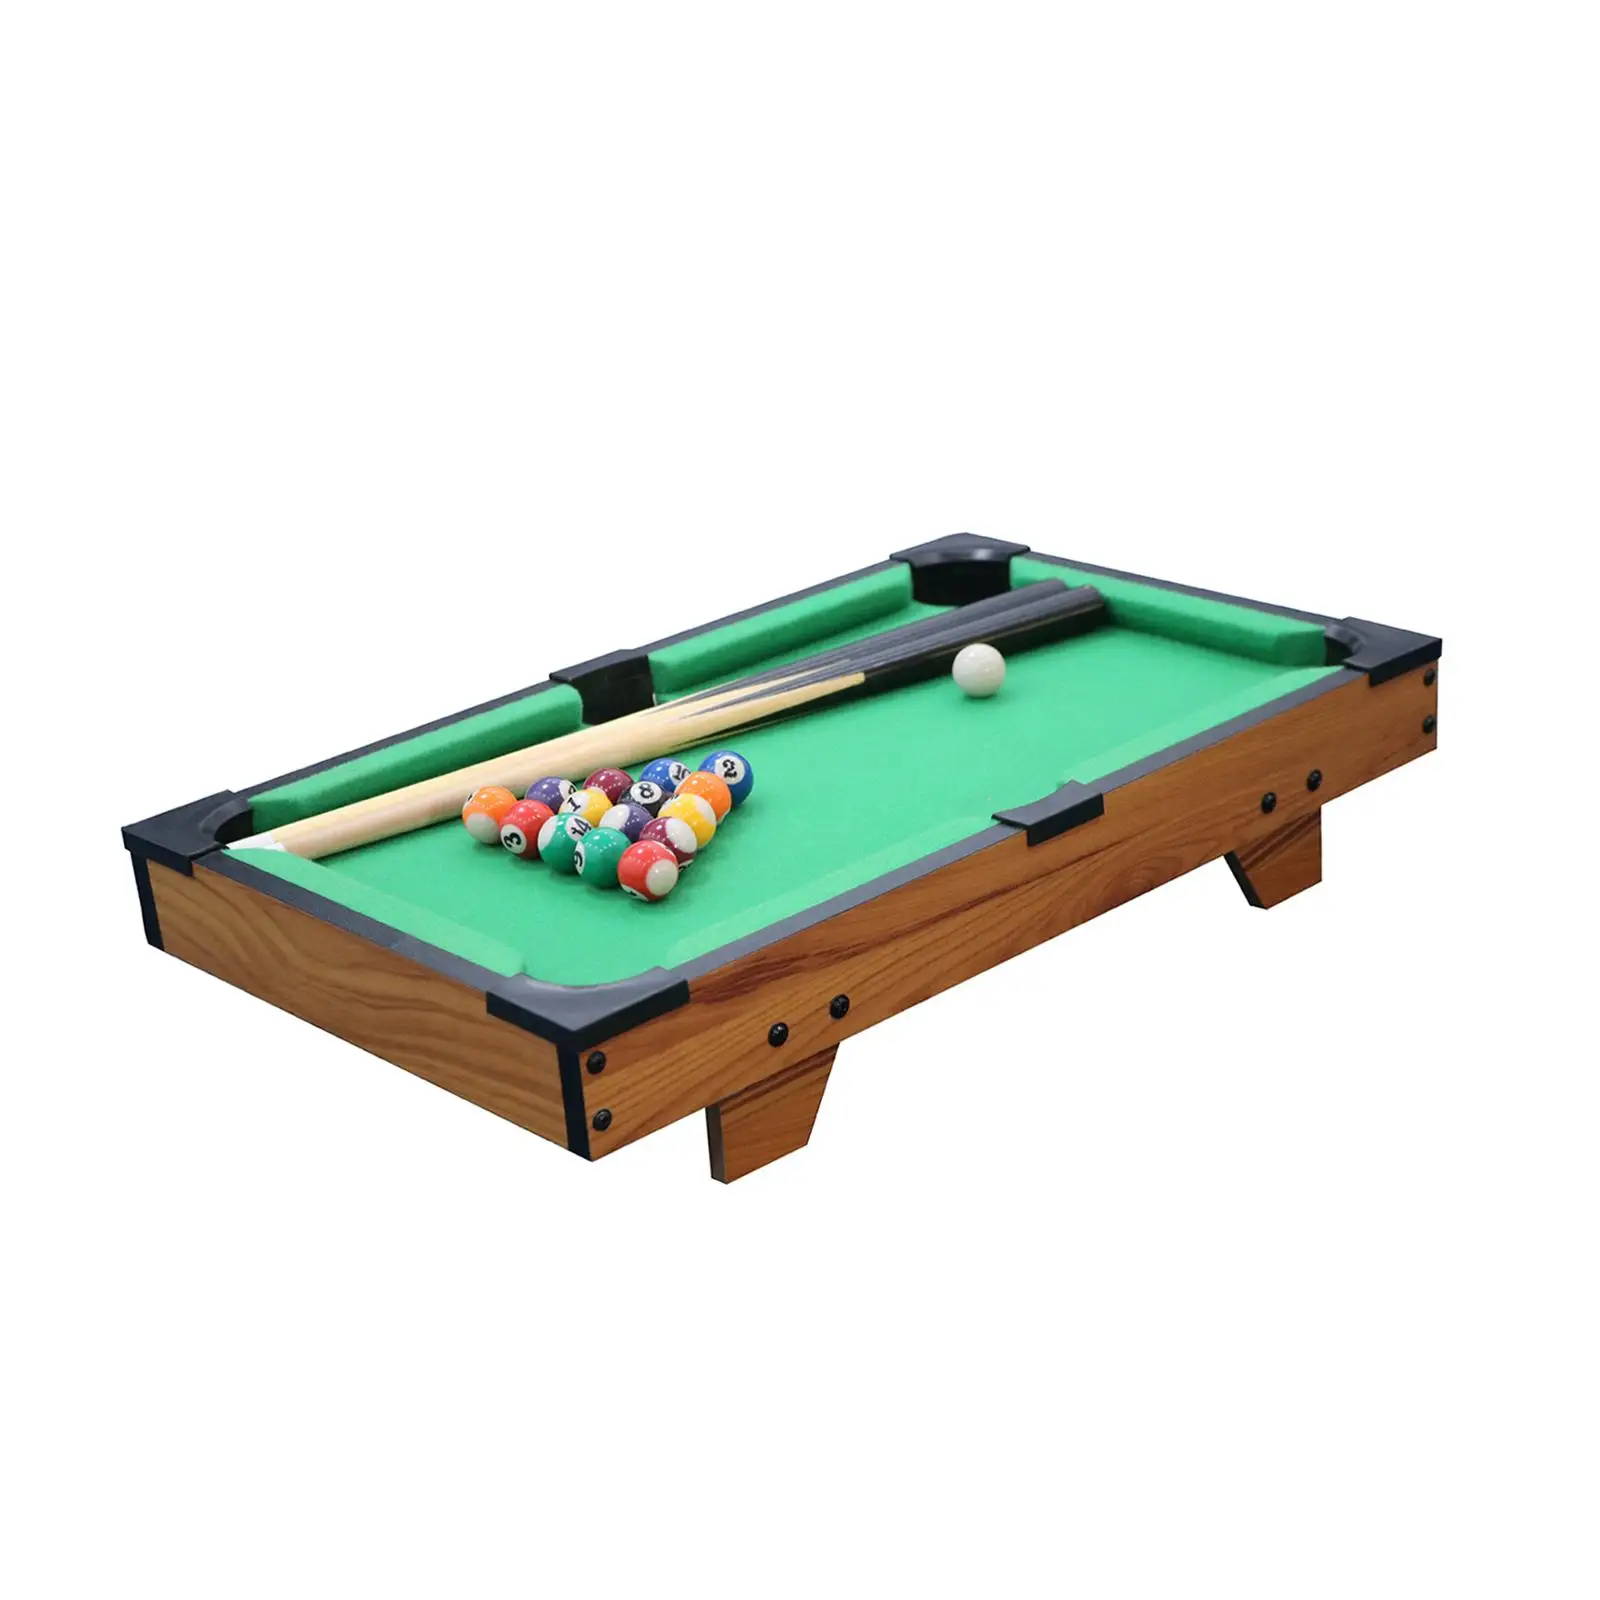 Mini Table pool Colorful Balls Felt Surface Game Set Educational Snooker Billiards Toy for Desktop Desk Sports Family Travel